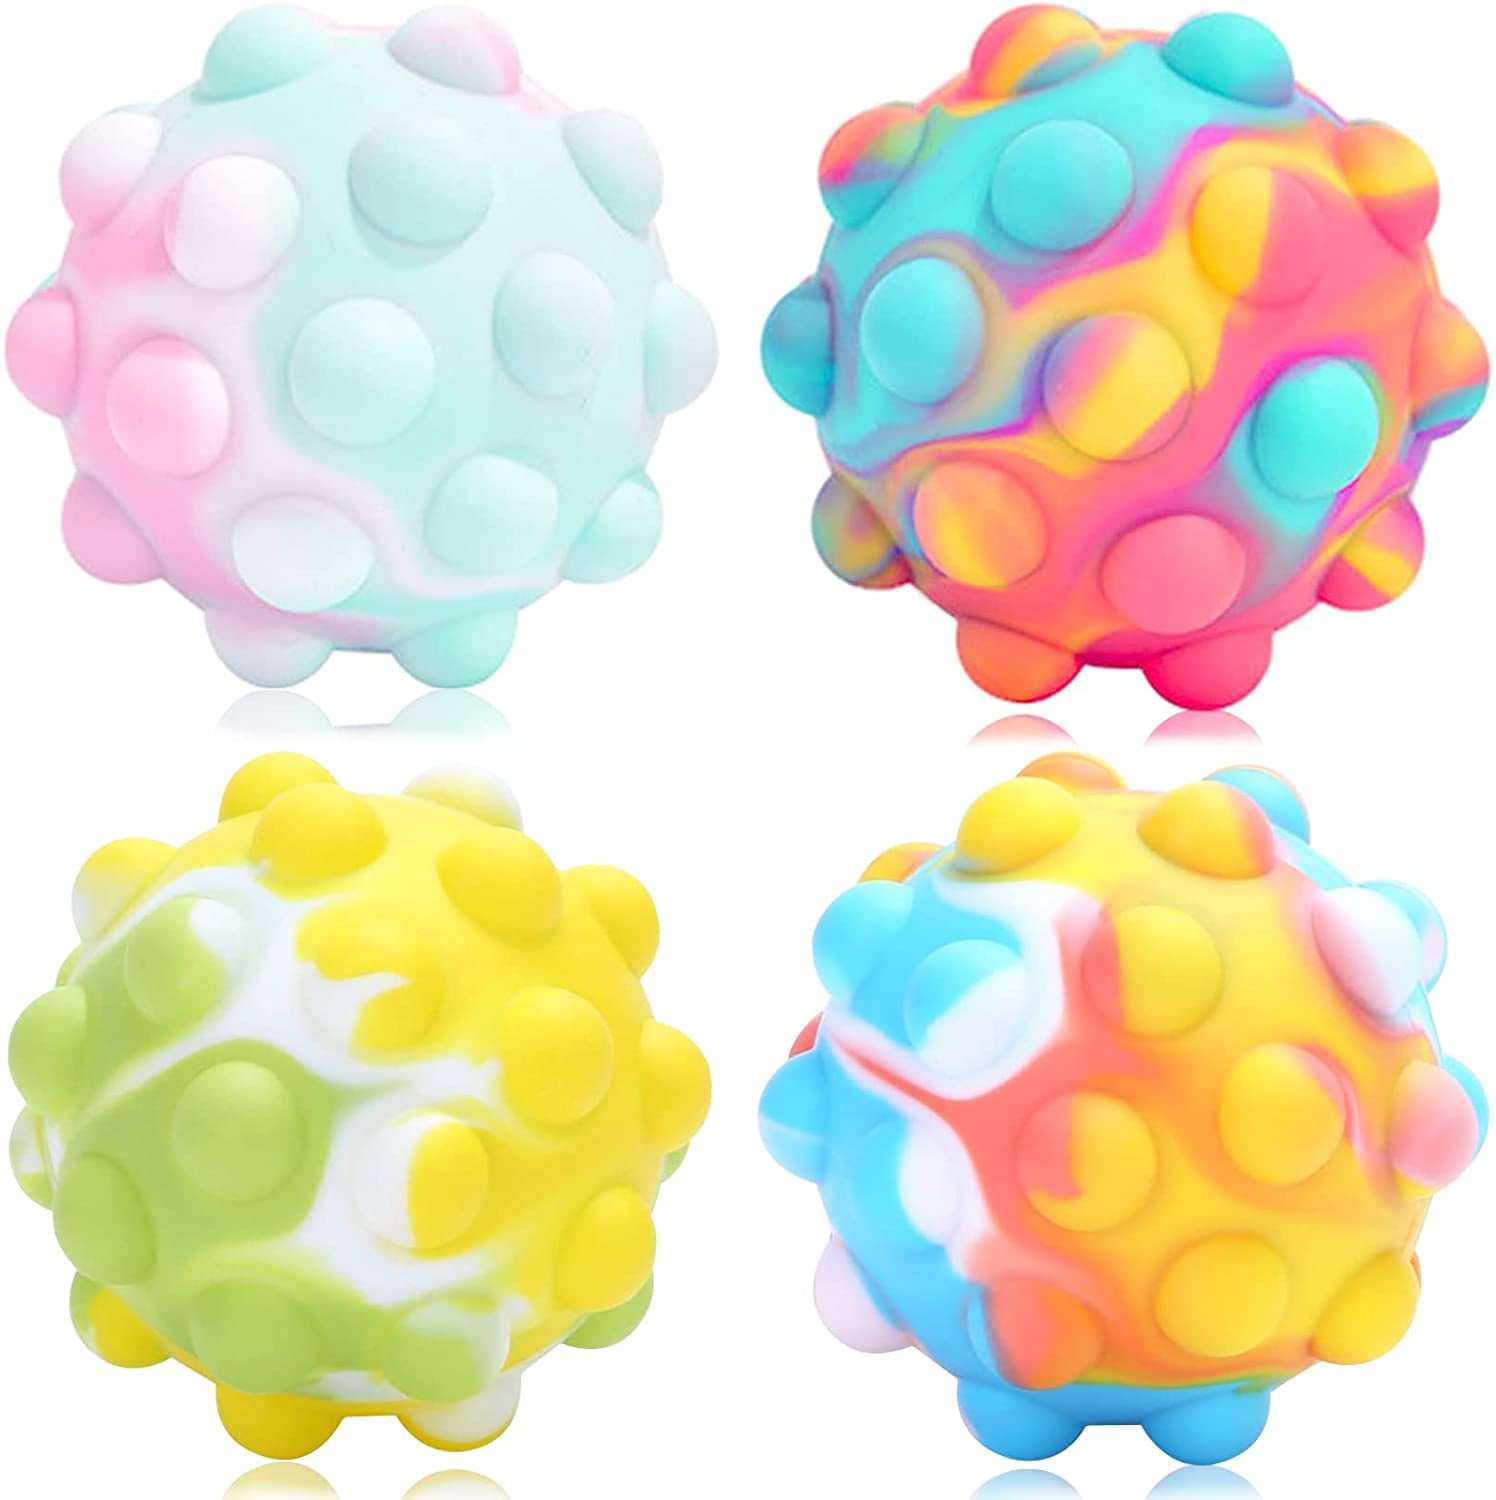 Pop Stress Balls Fidget Toy,3D Sensory Balls Fidget Toys 4 Packs for Kids Adults,Push Bubble Pop Fidget Toy for Its Autism Stress Relief Poppers Ball